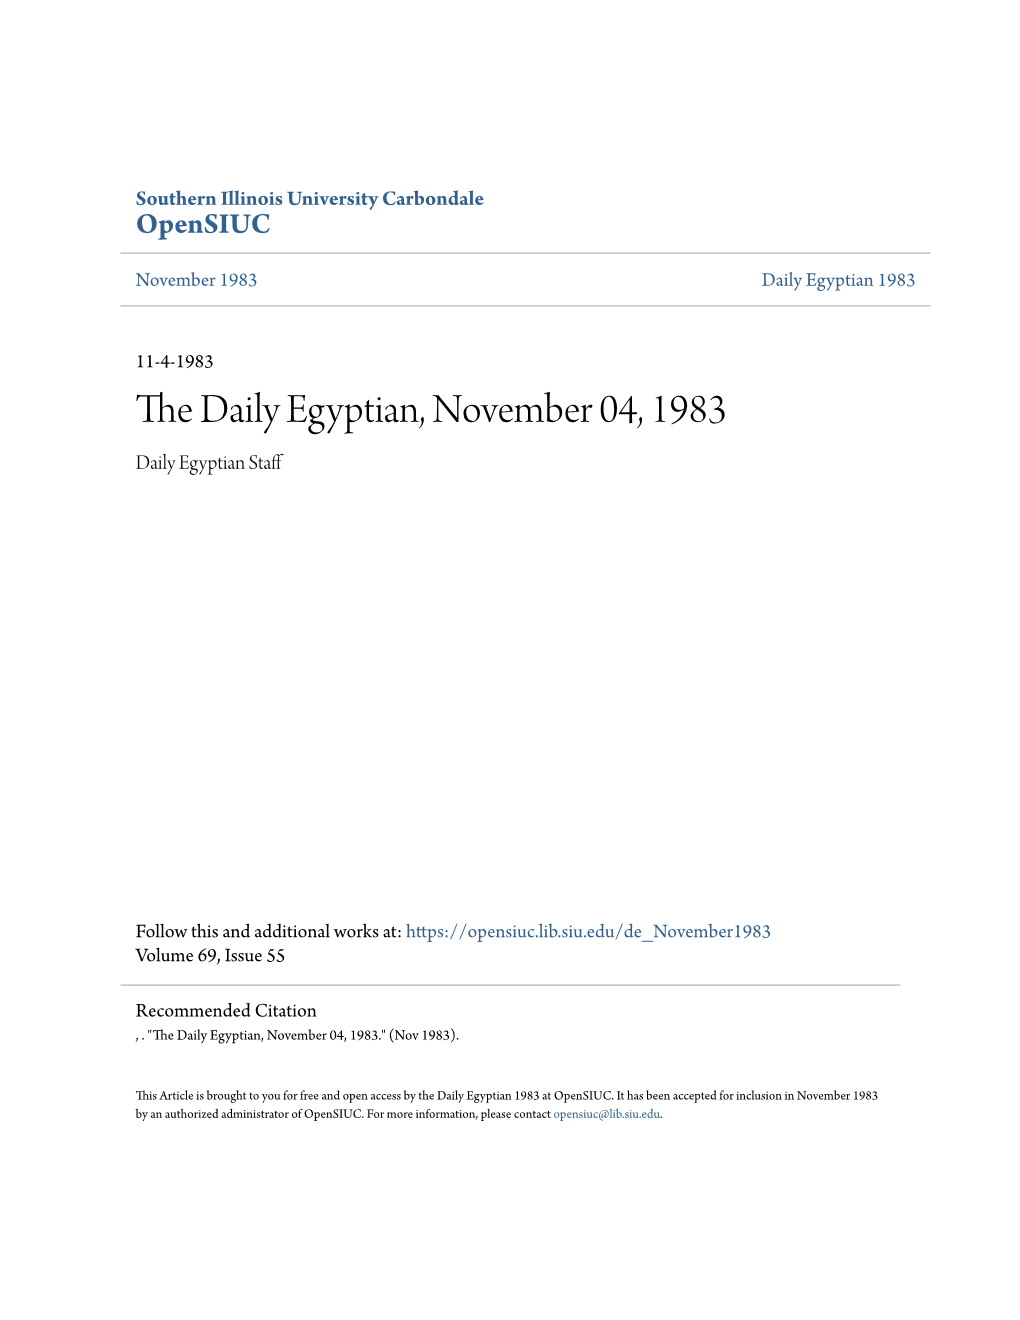 The Daily Egyptian, November 04, 1983